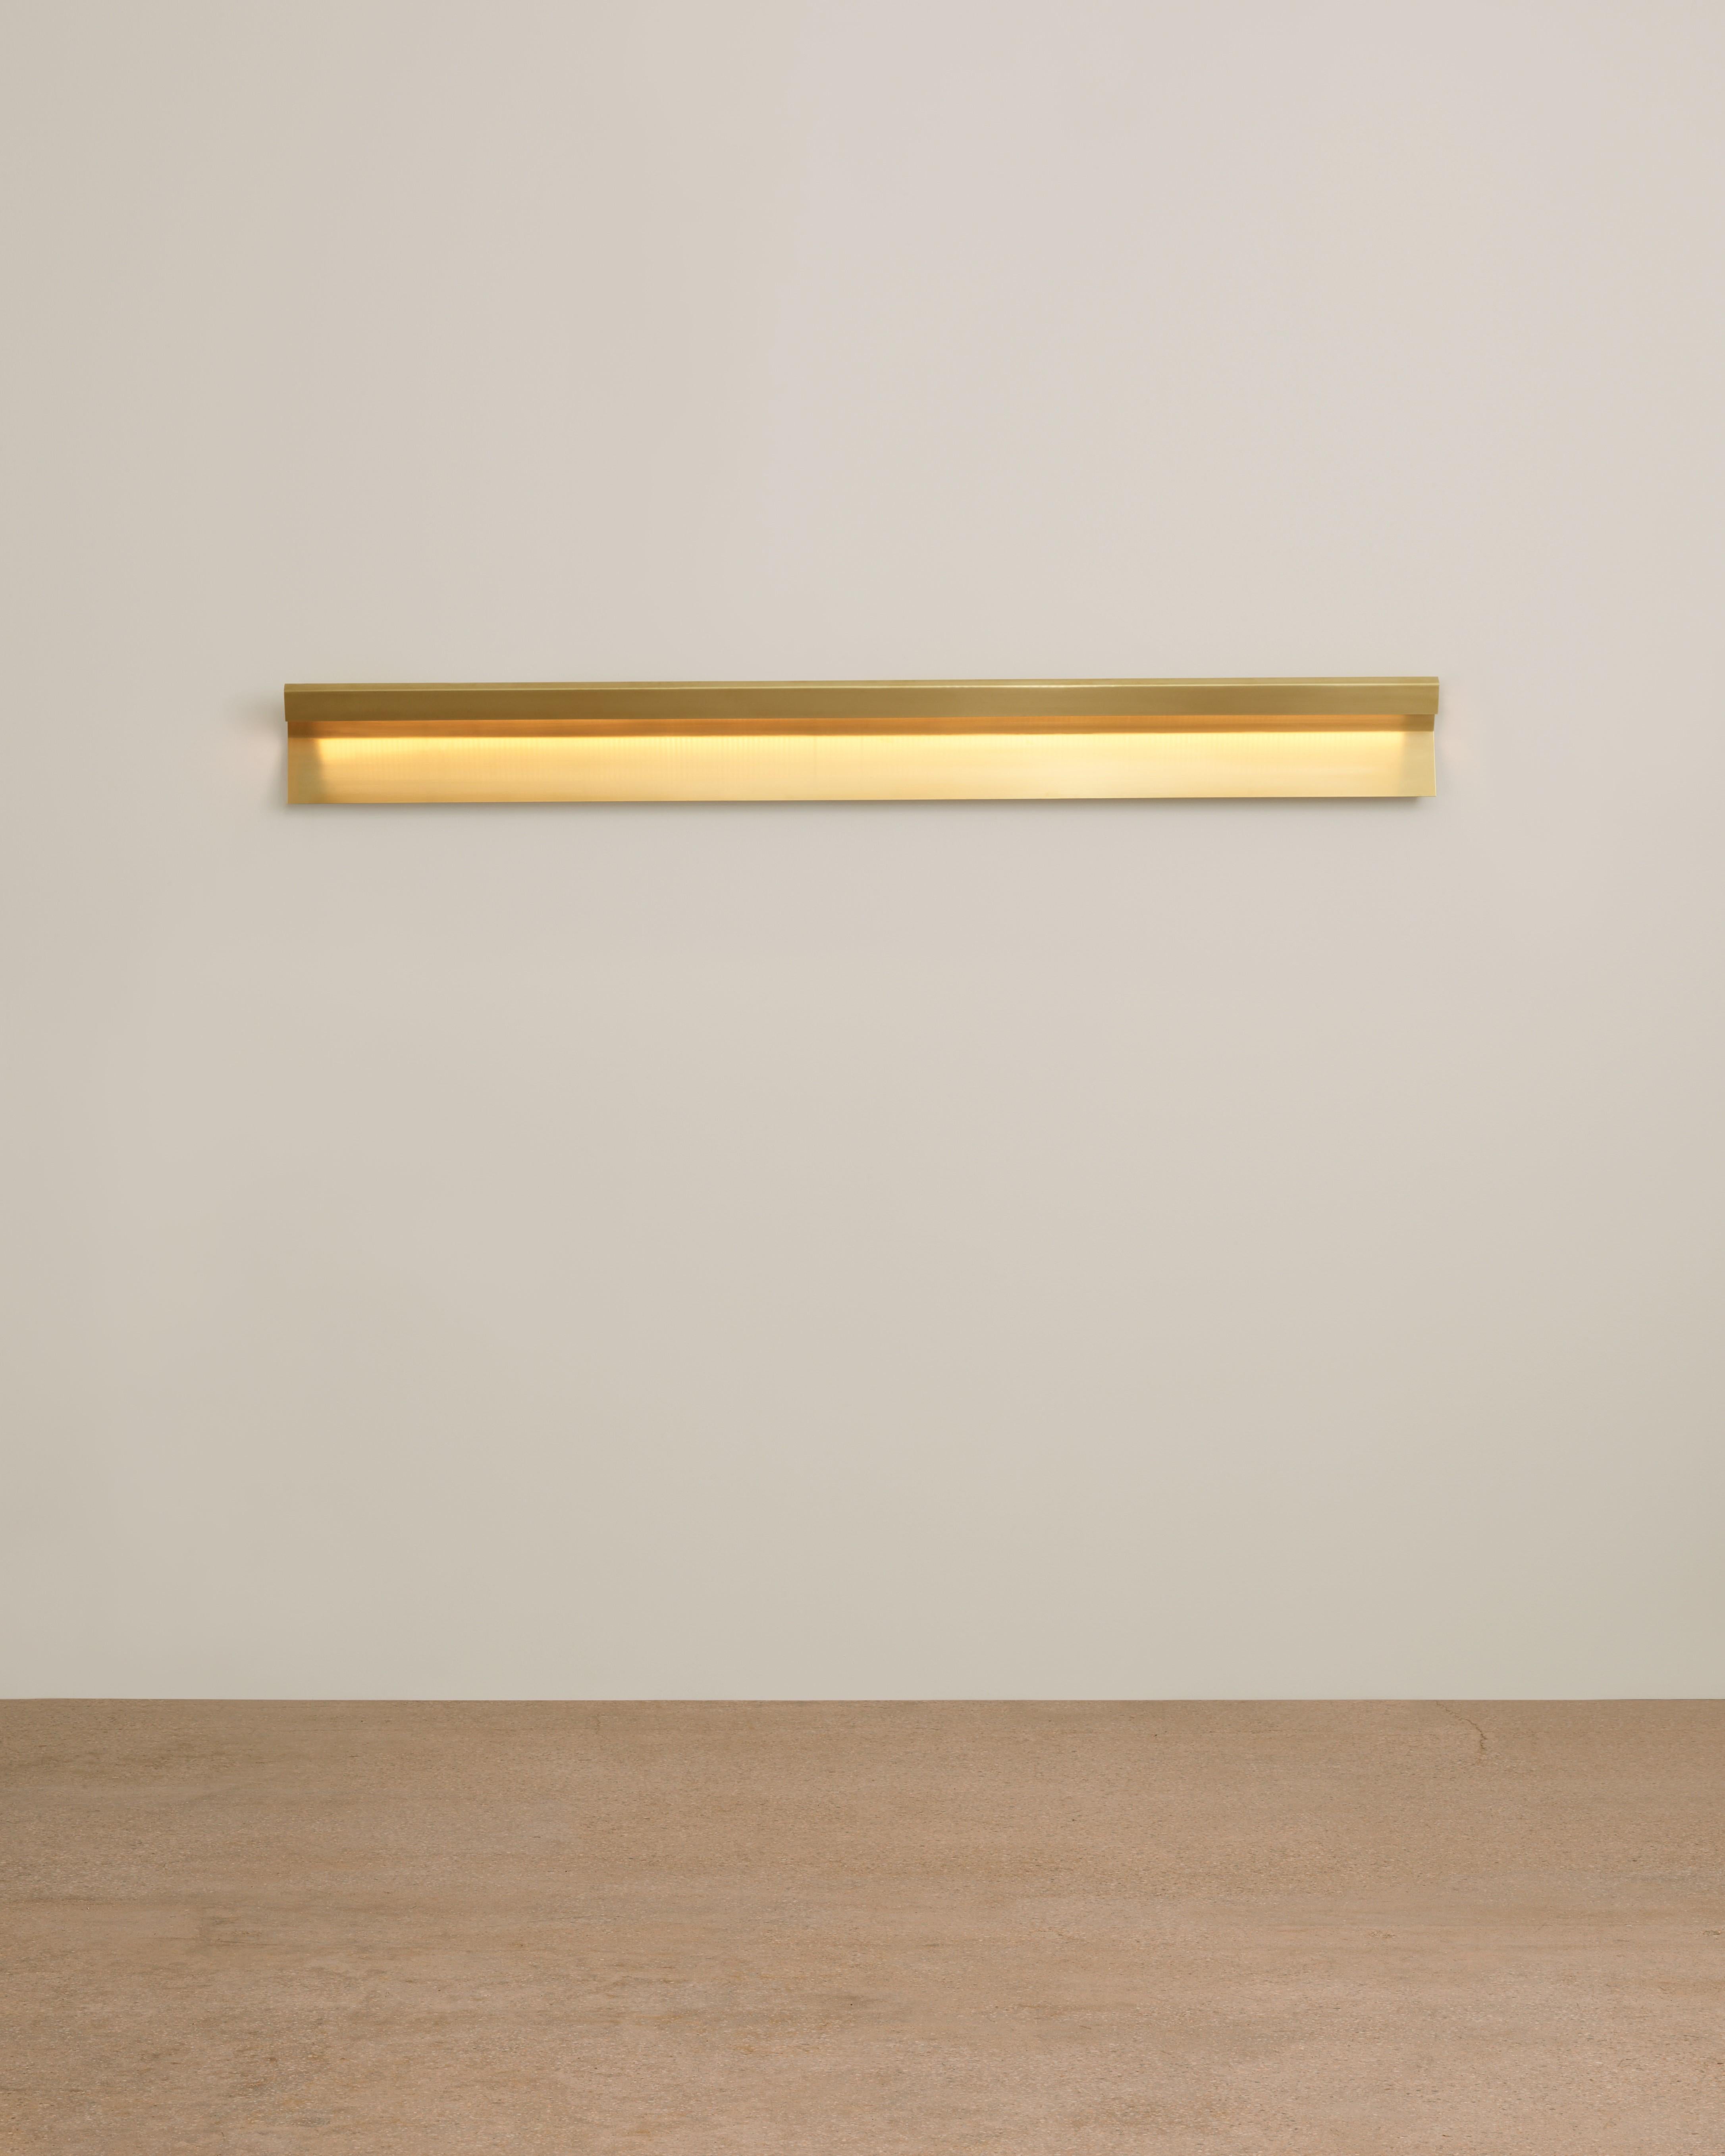 Mano wall-up lamp by Umberto Bellardi Ricci
Dimensions: D 3